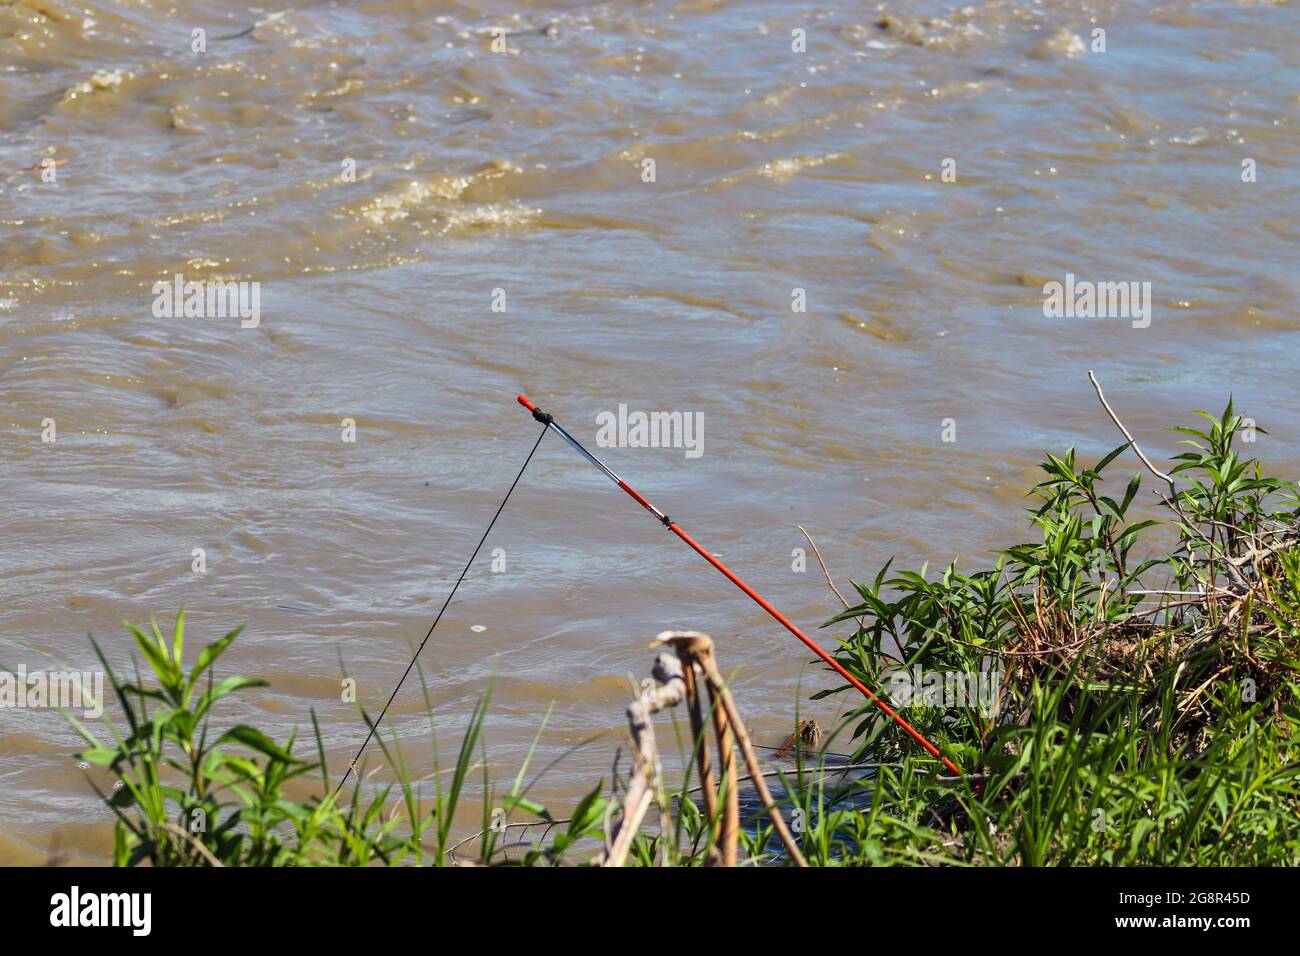 Catfish with Set Line Fishing Alone the Niobrara River in Nebraska Stock  Image - Image of fisherman, gear: 225096207